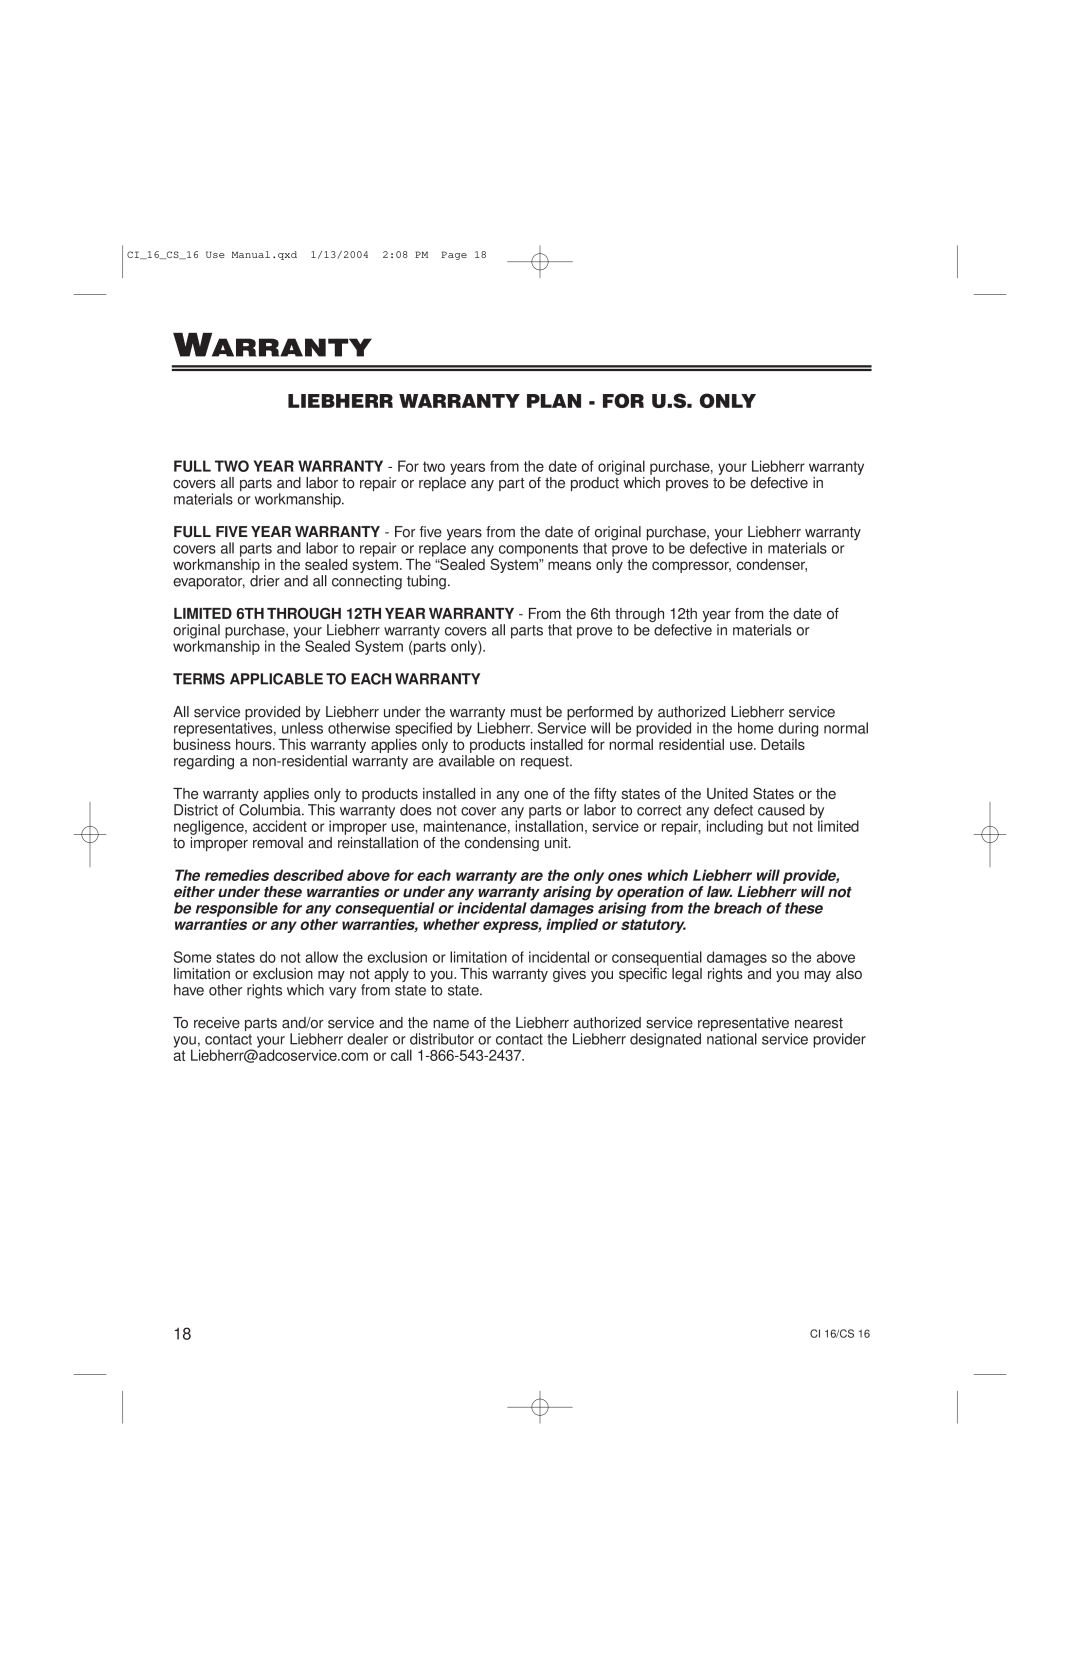 Liebherr CS16, CI16 manual Liebherr Warranty Plan - For U.S. Only 